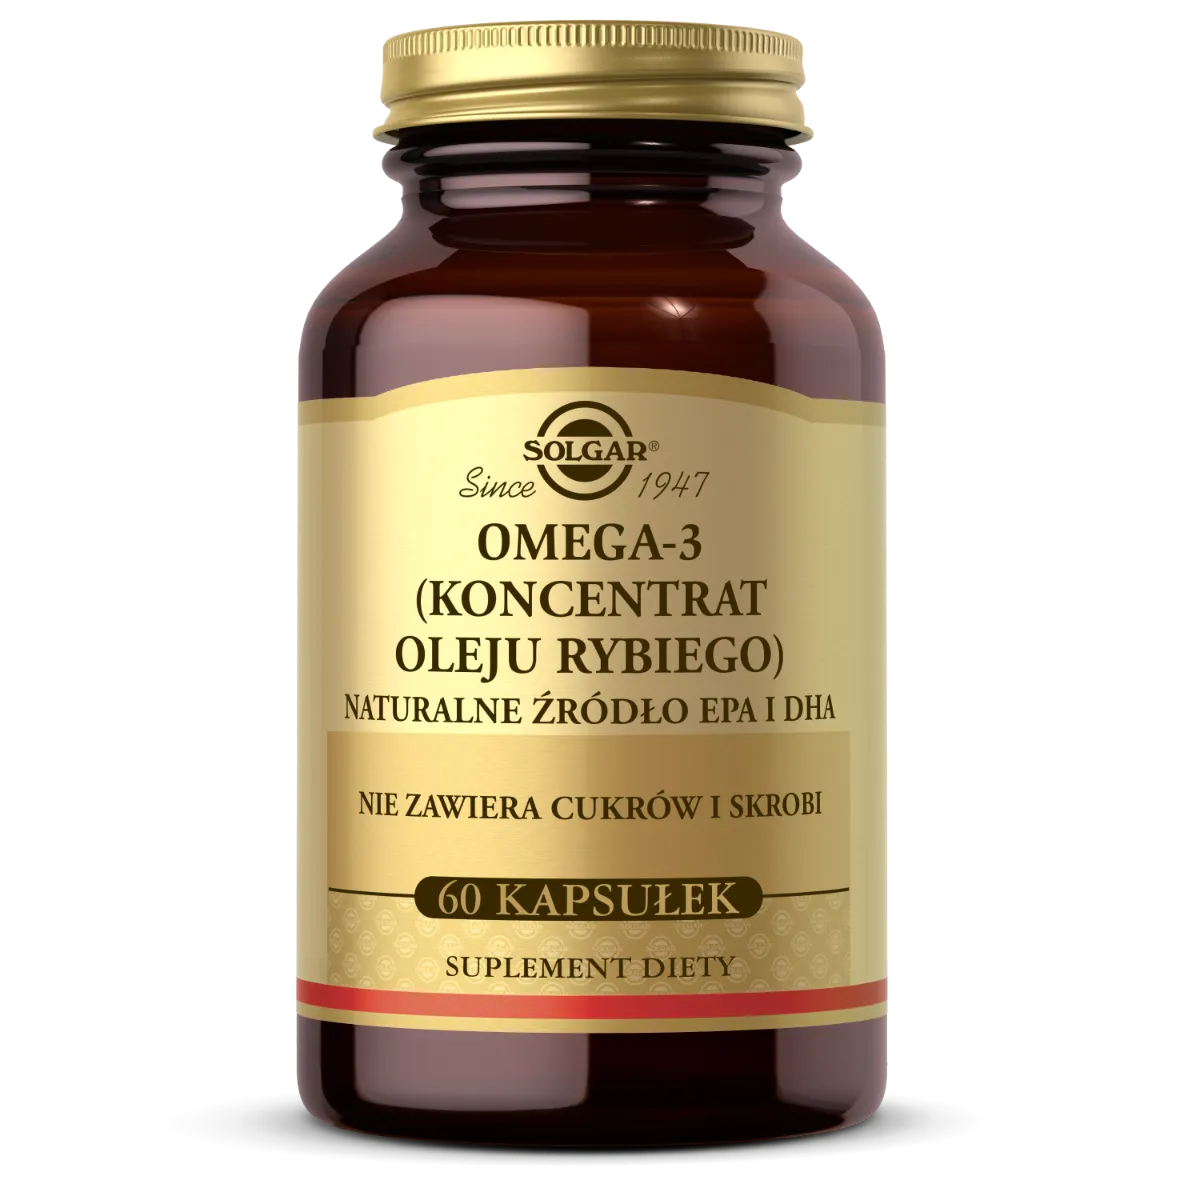 Solgar Omega-3 Naturalne Źródło EPA i DHA, suplement diety, 60 kapsułek